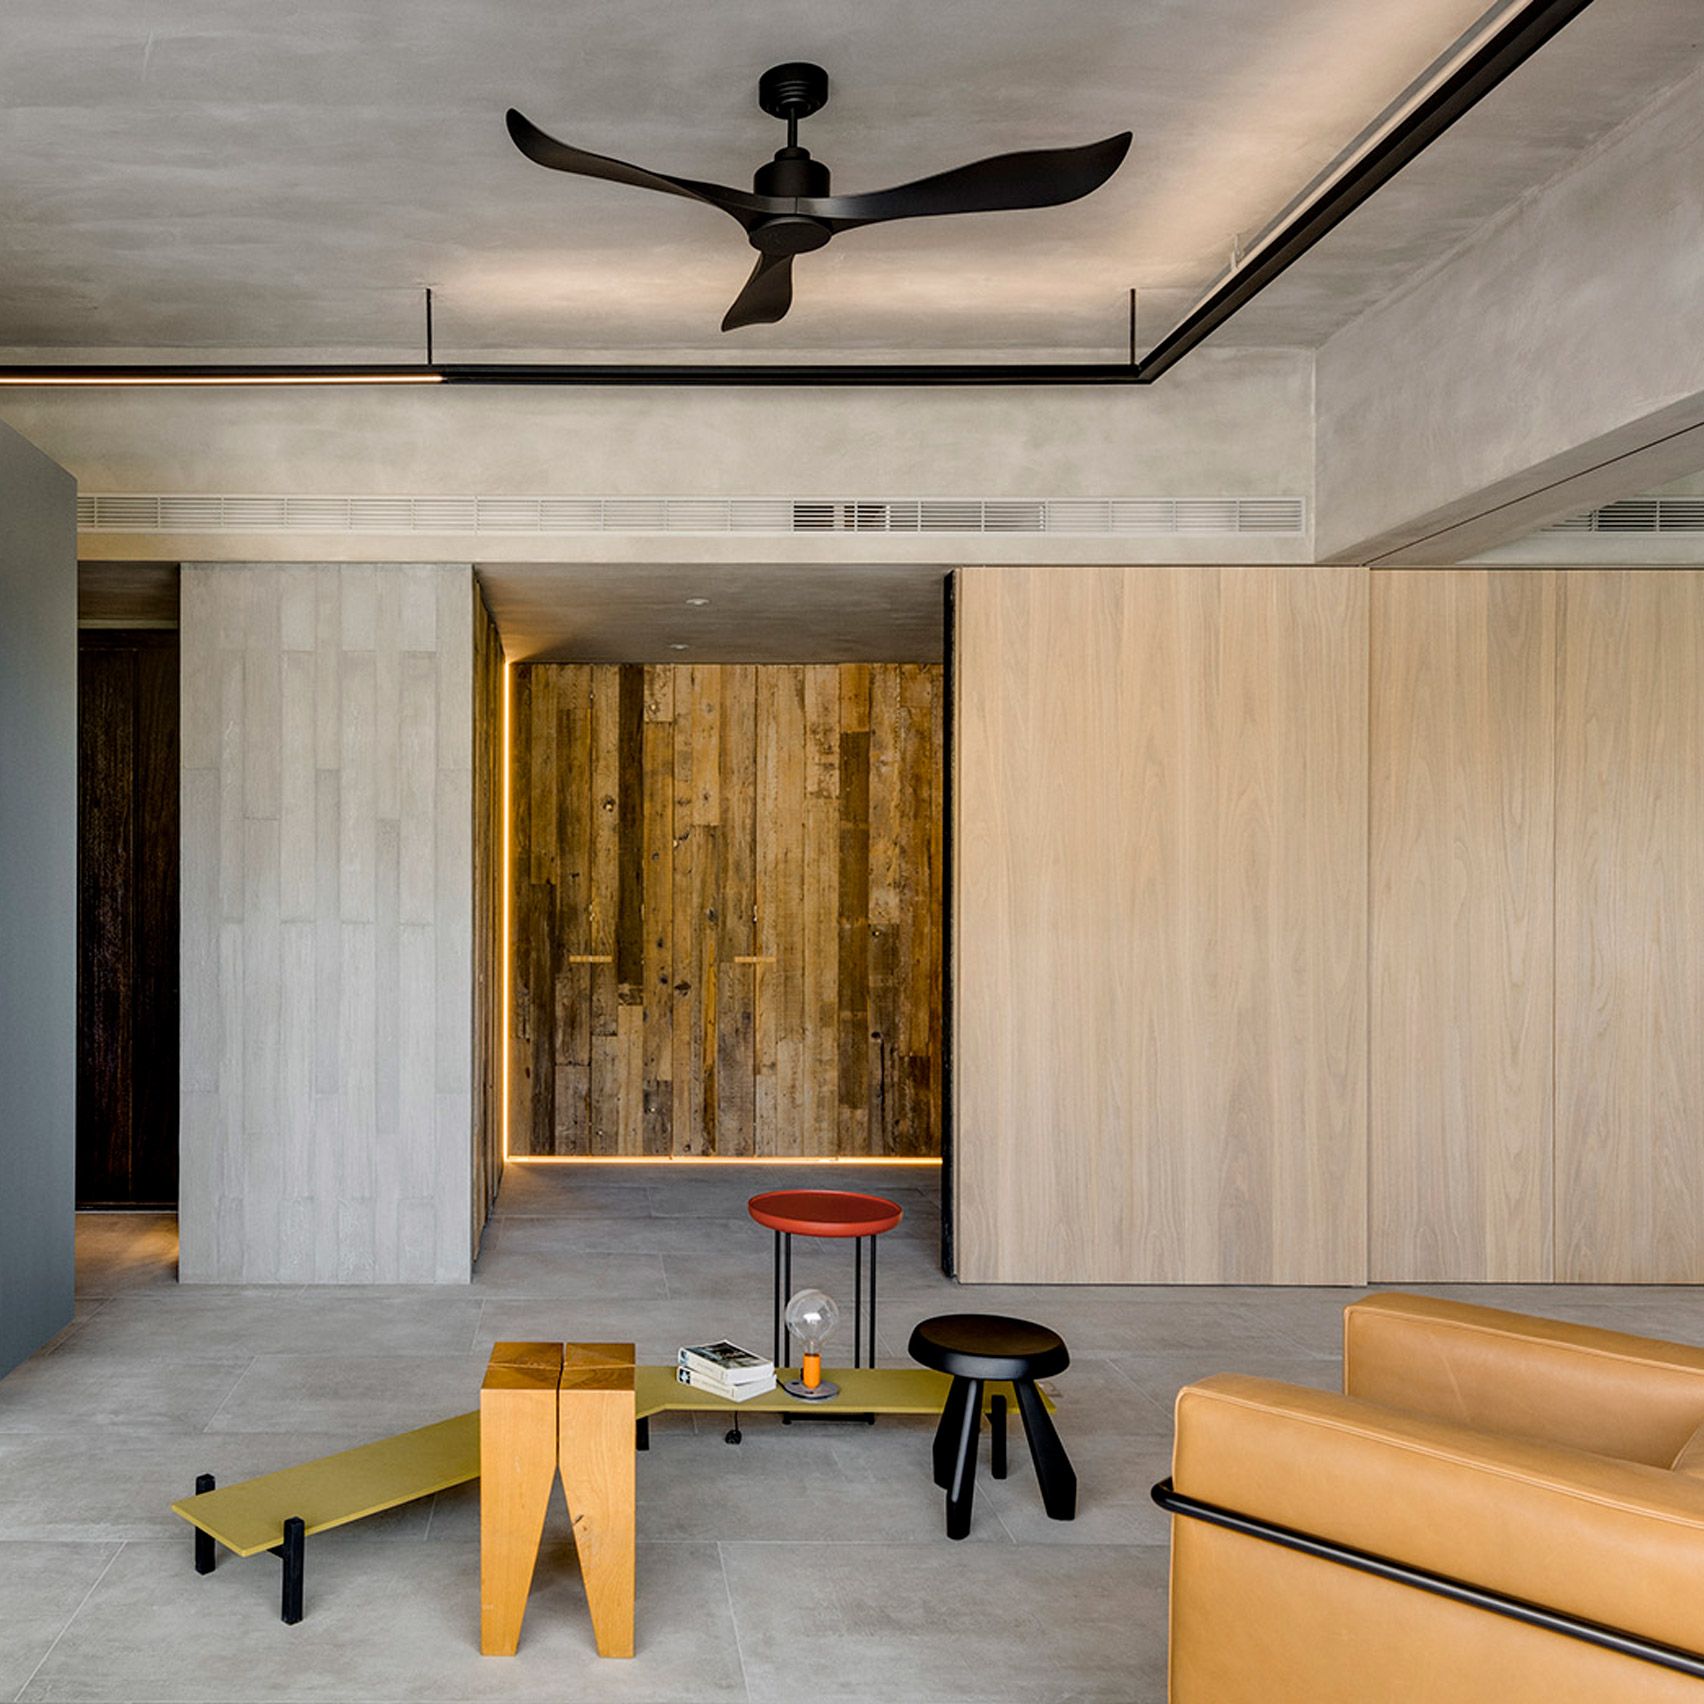 Din-a-ka apartment, Taiwan, by Wei Yi International Design Associates